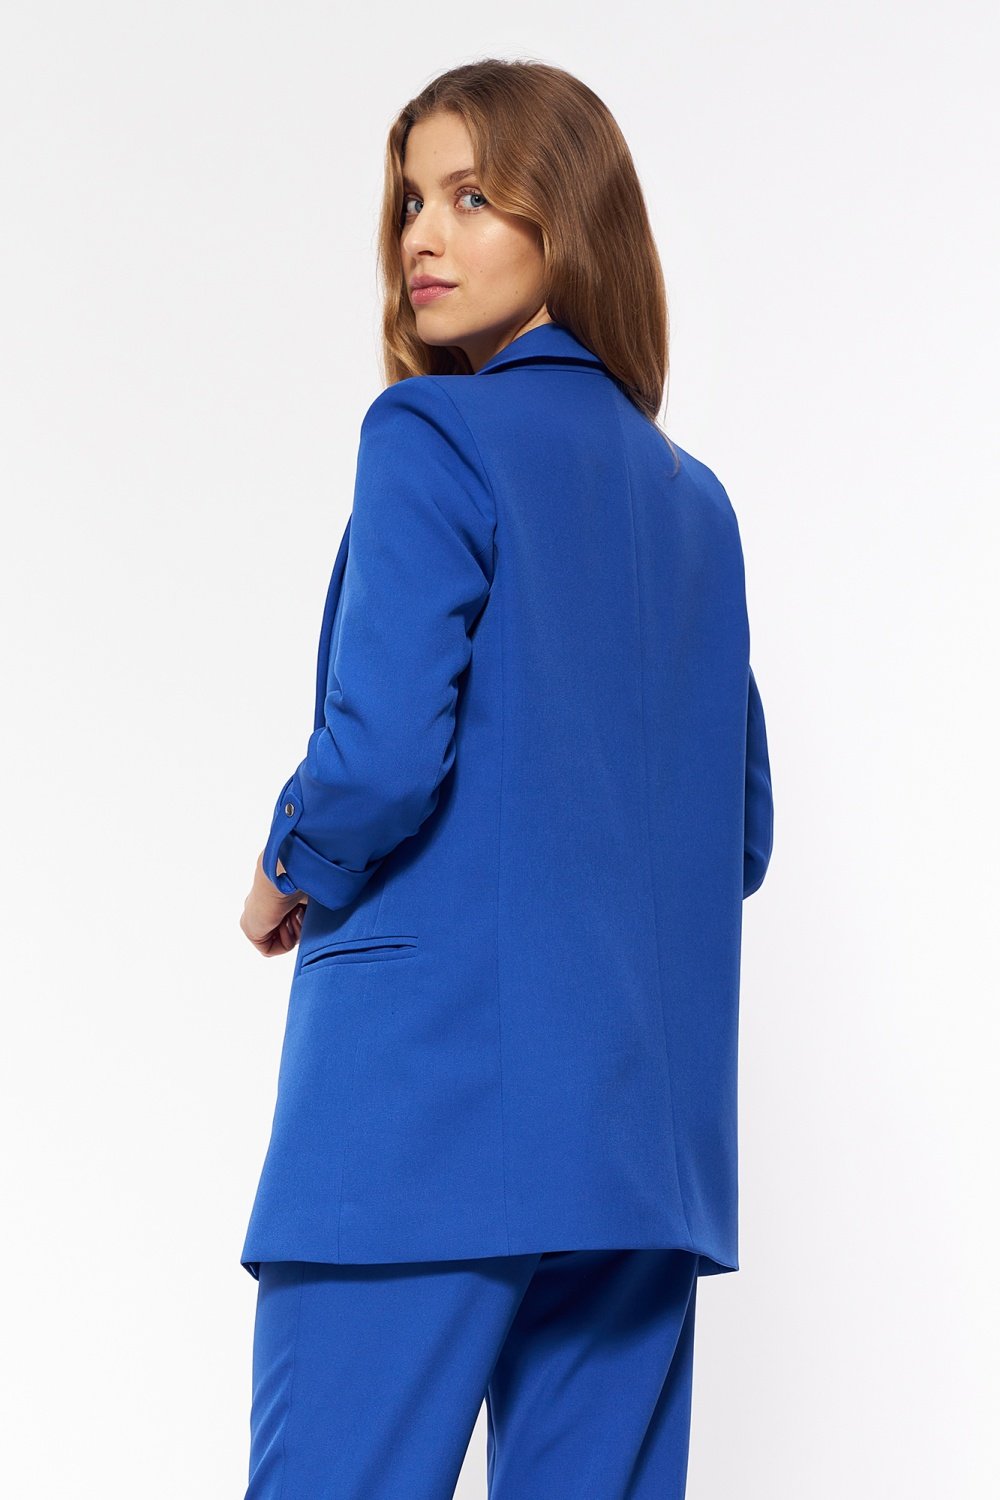 Blue Suit Jacket Nife Posh Styles Apparel